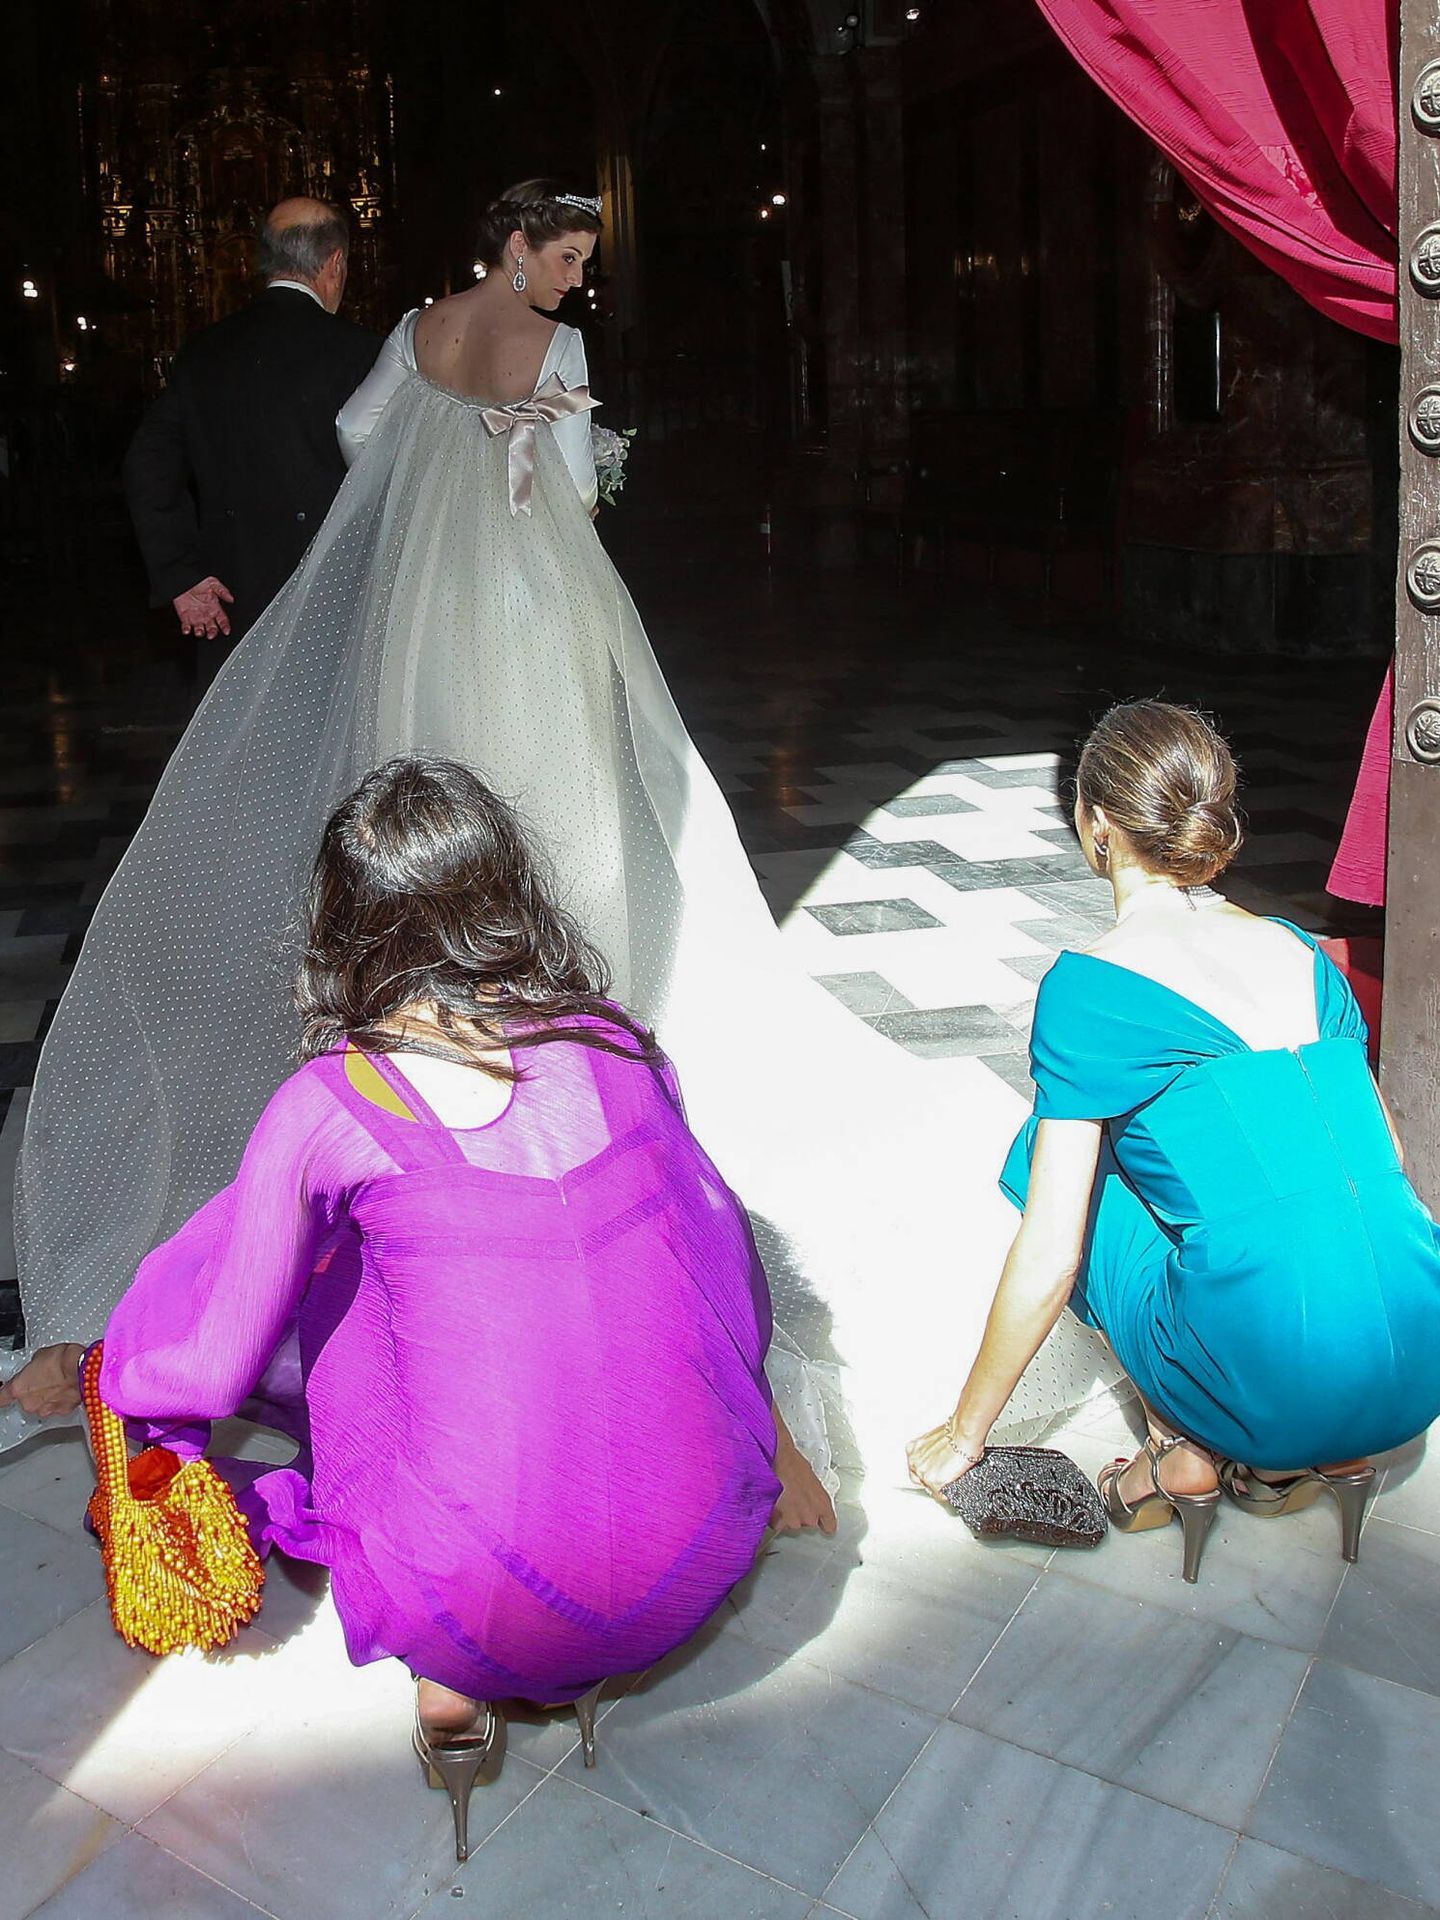 Detalle de la espalda del vestido de la novia. (Sevilla Press)